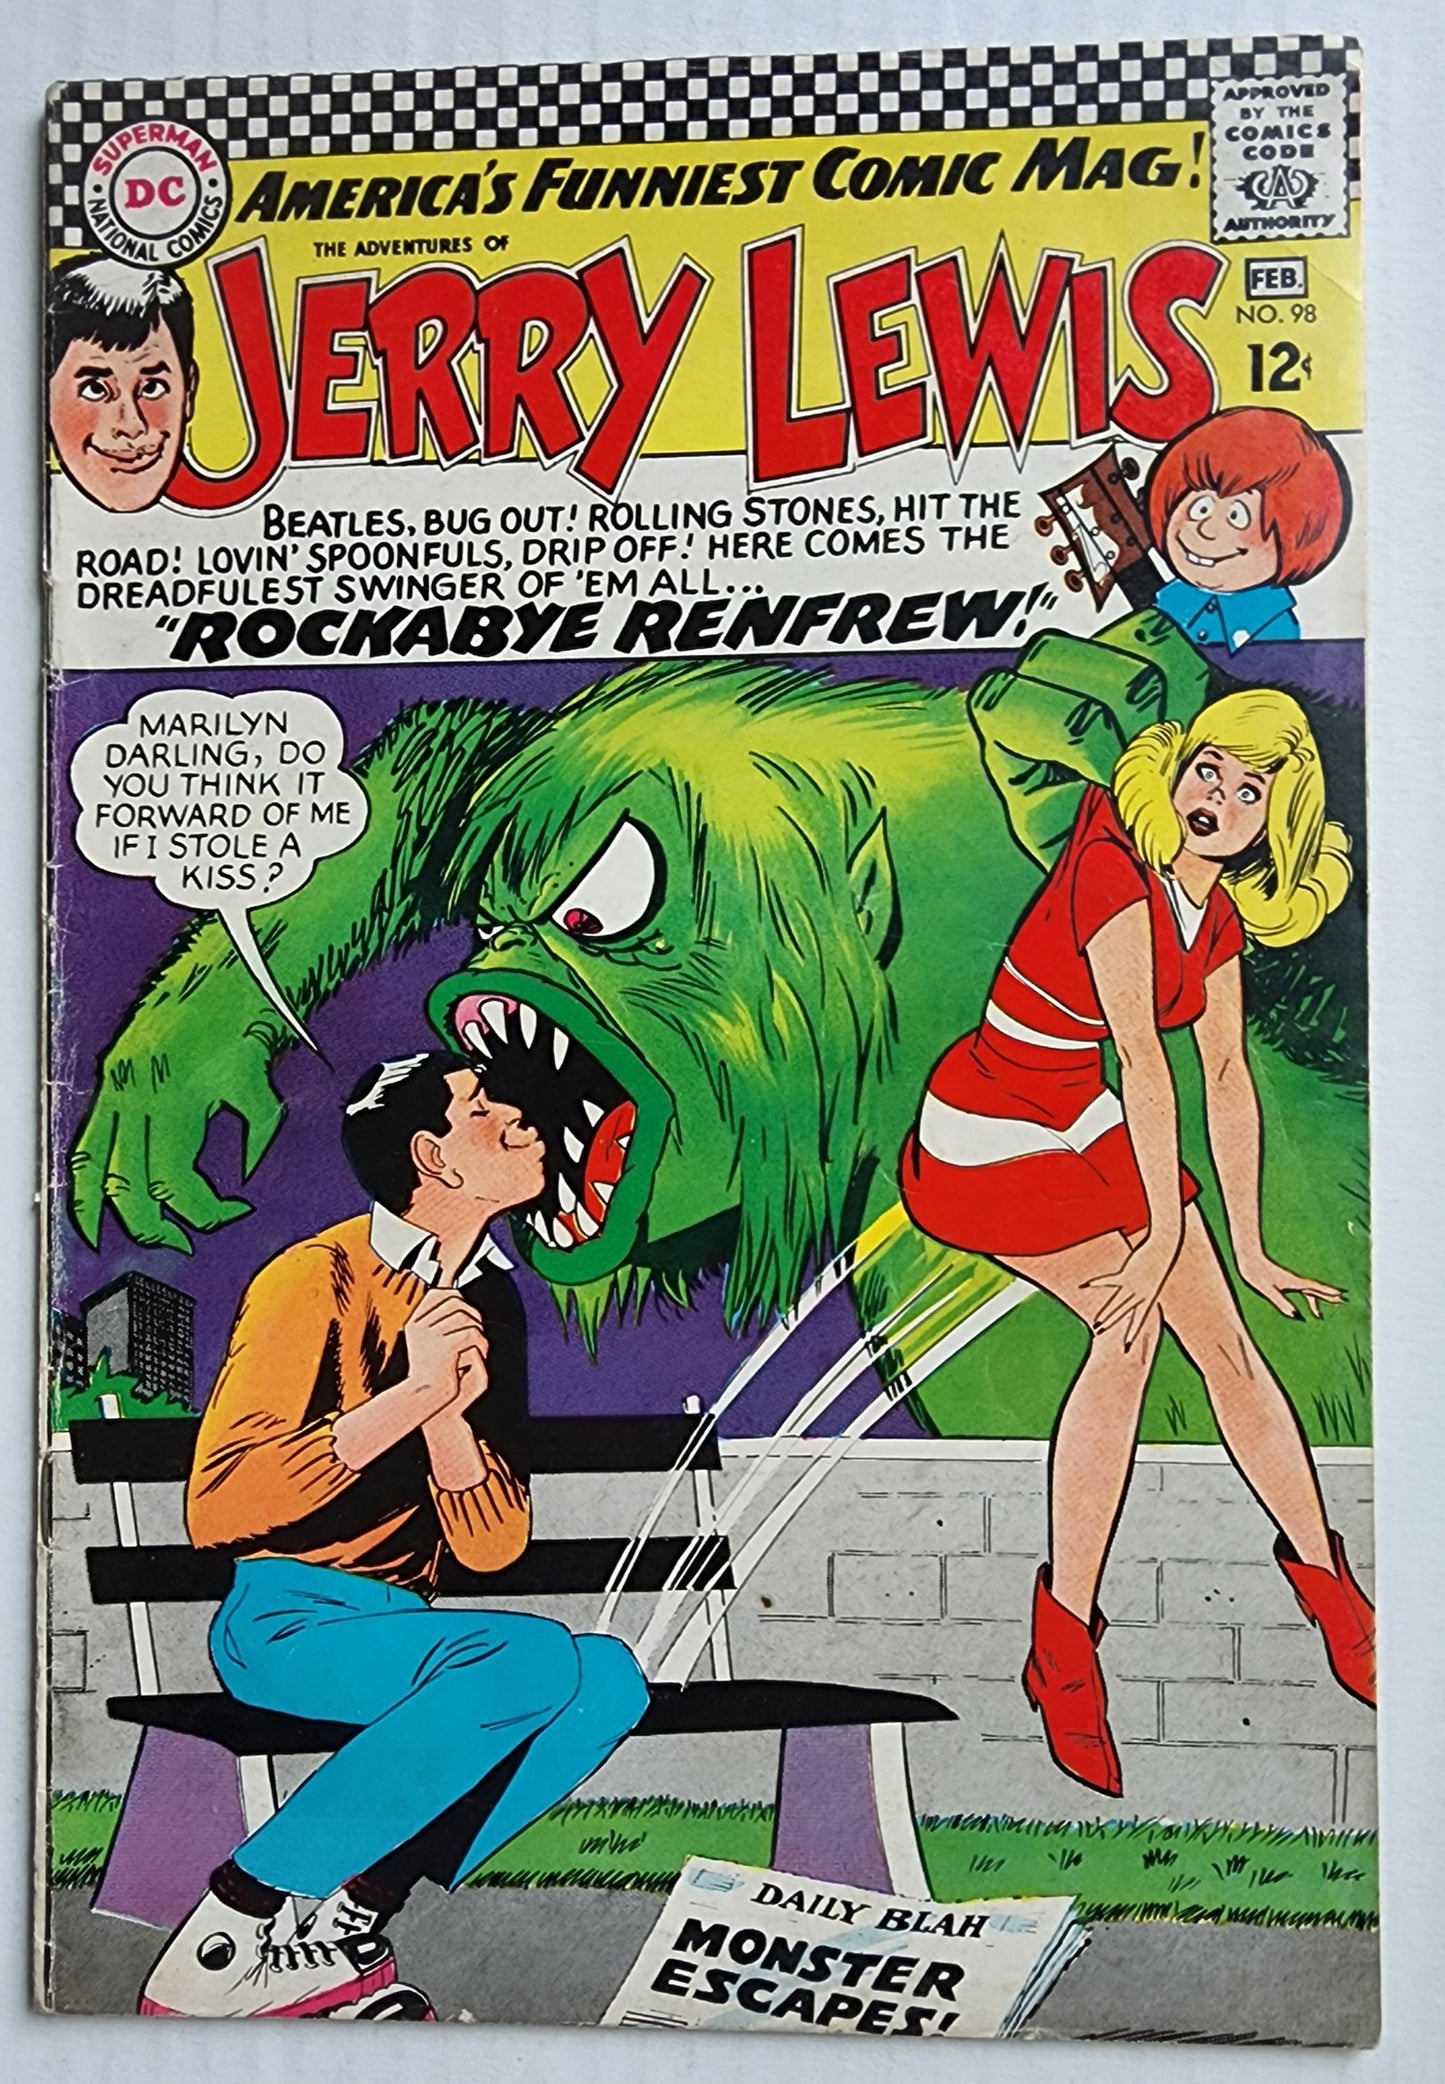 ADVENTURES OF JERRY LEWIS #98 1967